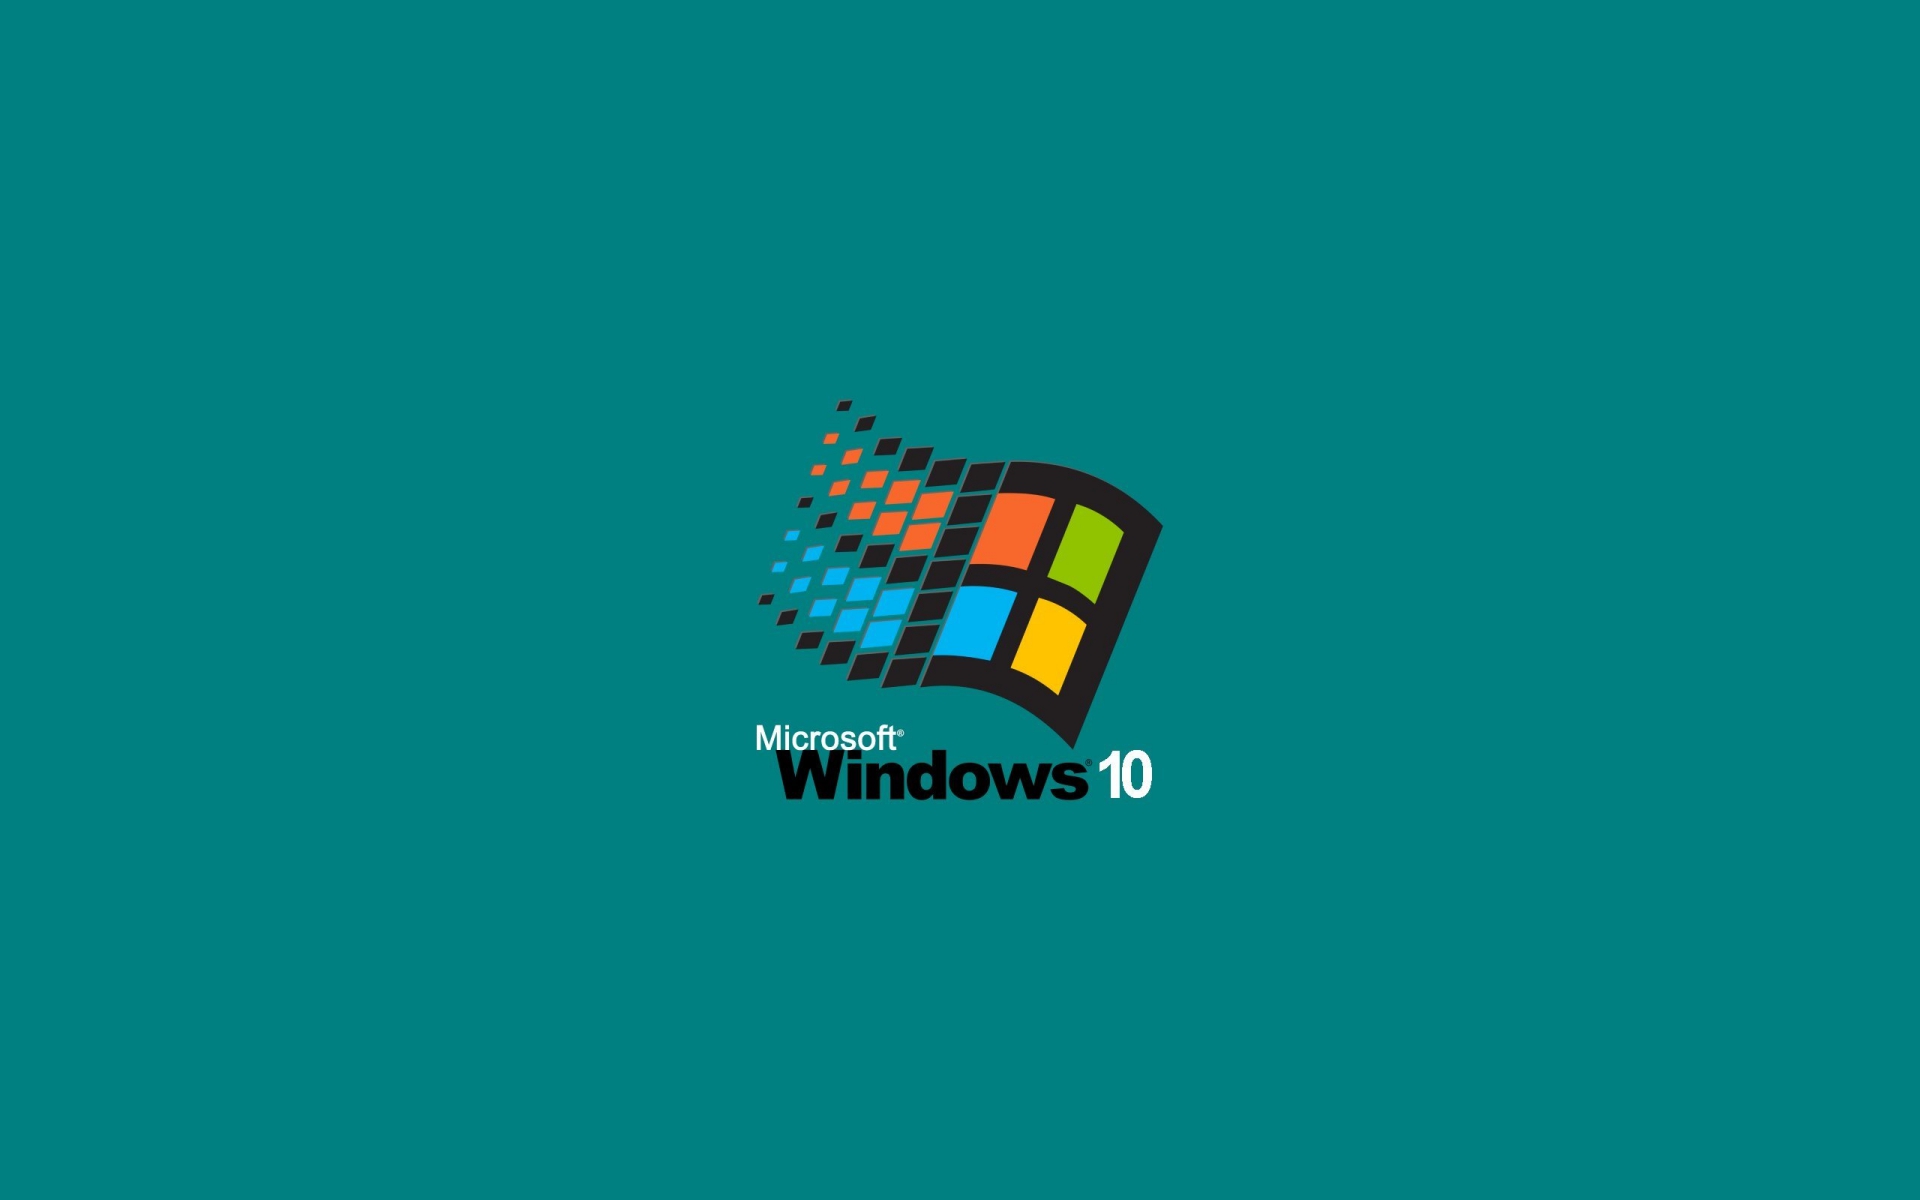 windows-10-logo-blue-background-windows-95-style_1920x1200.jpg